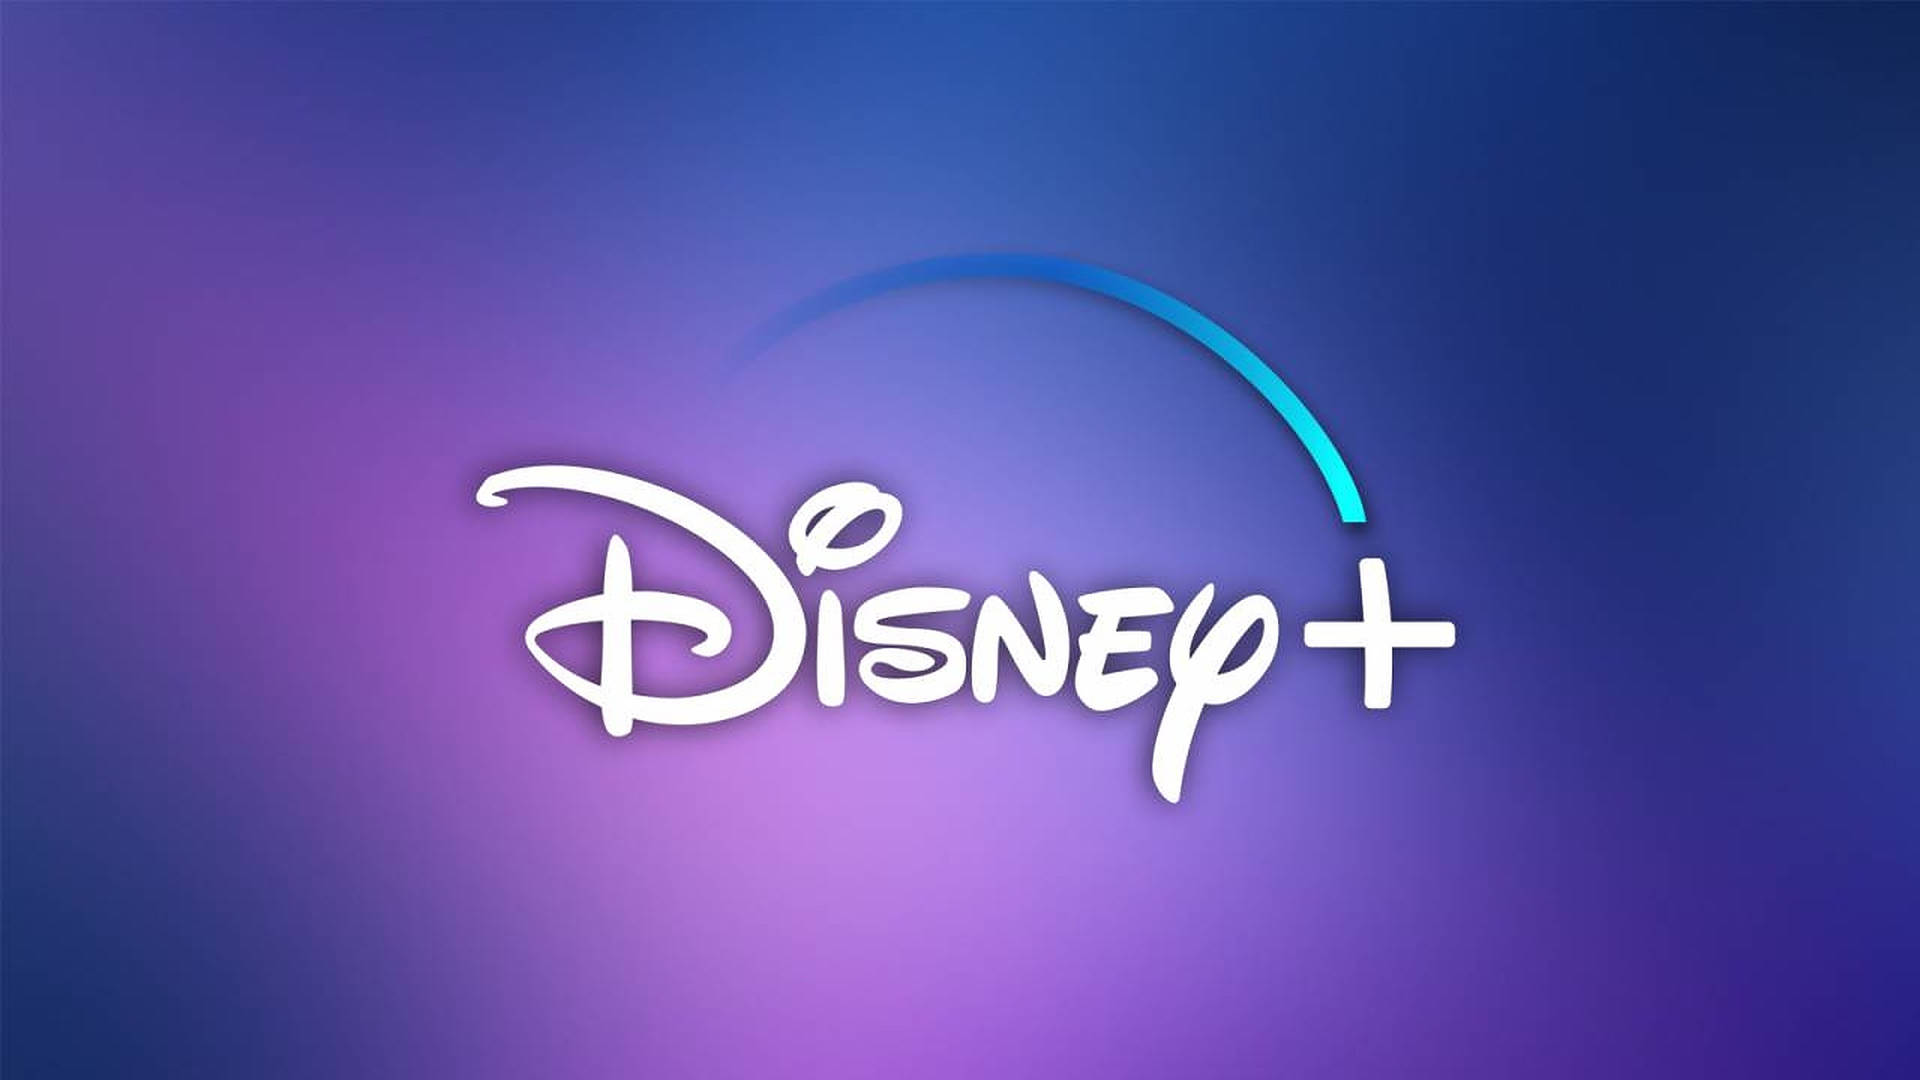 Disney Logo Plus Purple Gradient